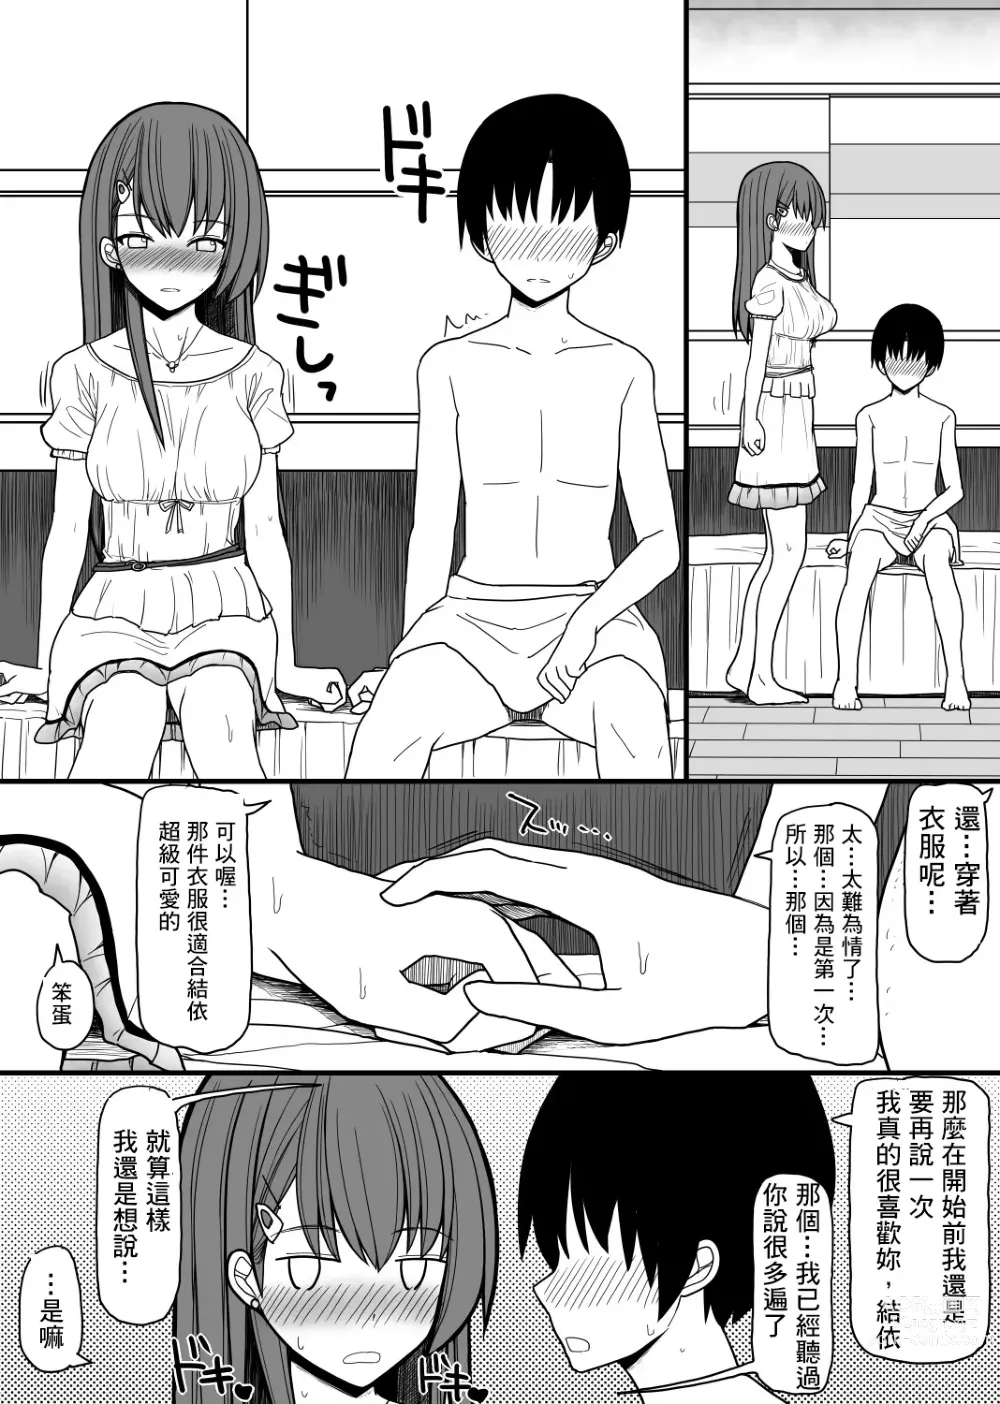 Page 4 of doujinshi 超能力を使える少年と監視員の少女